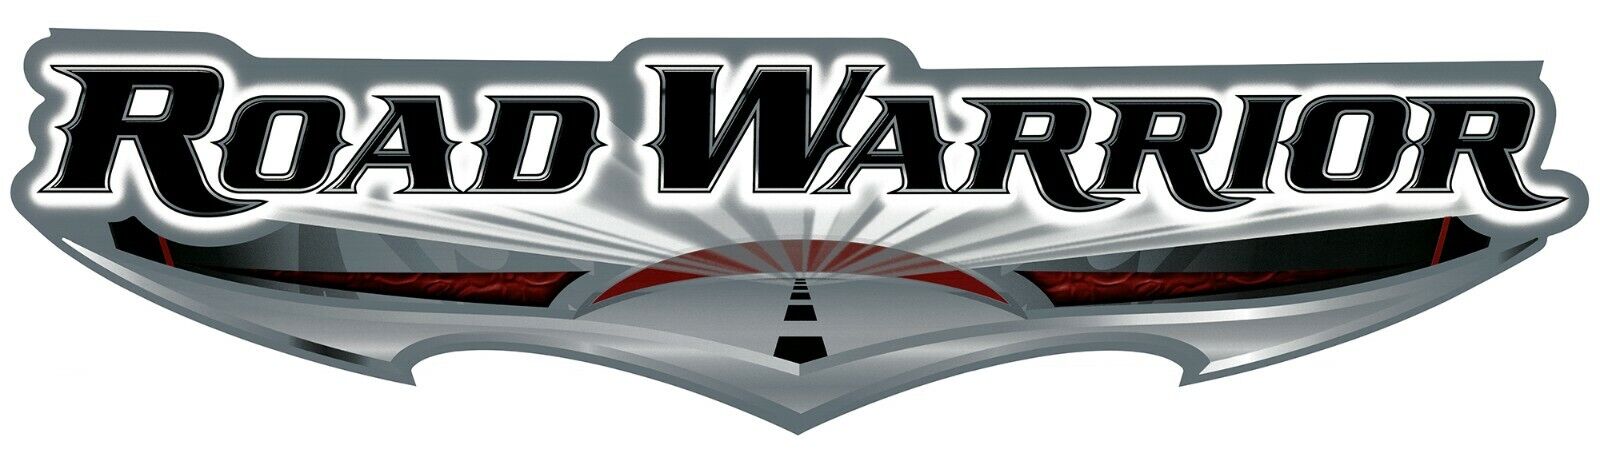 1 RV Camper Trailer Heartland Road Warrior Logo Decal Graphic-2203